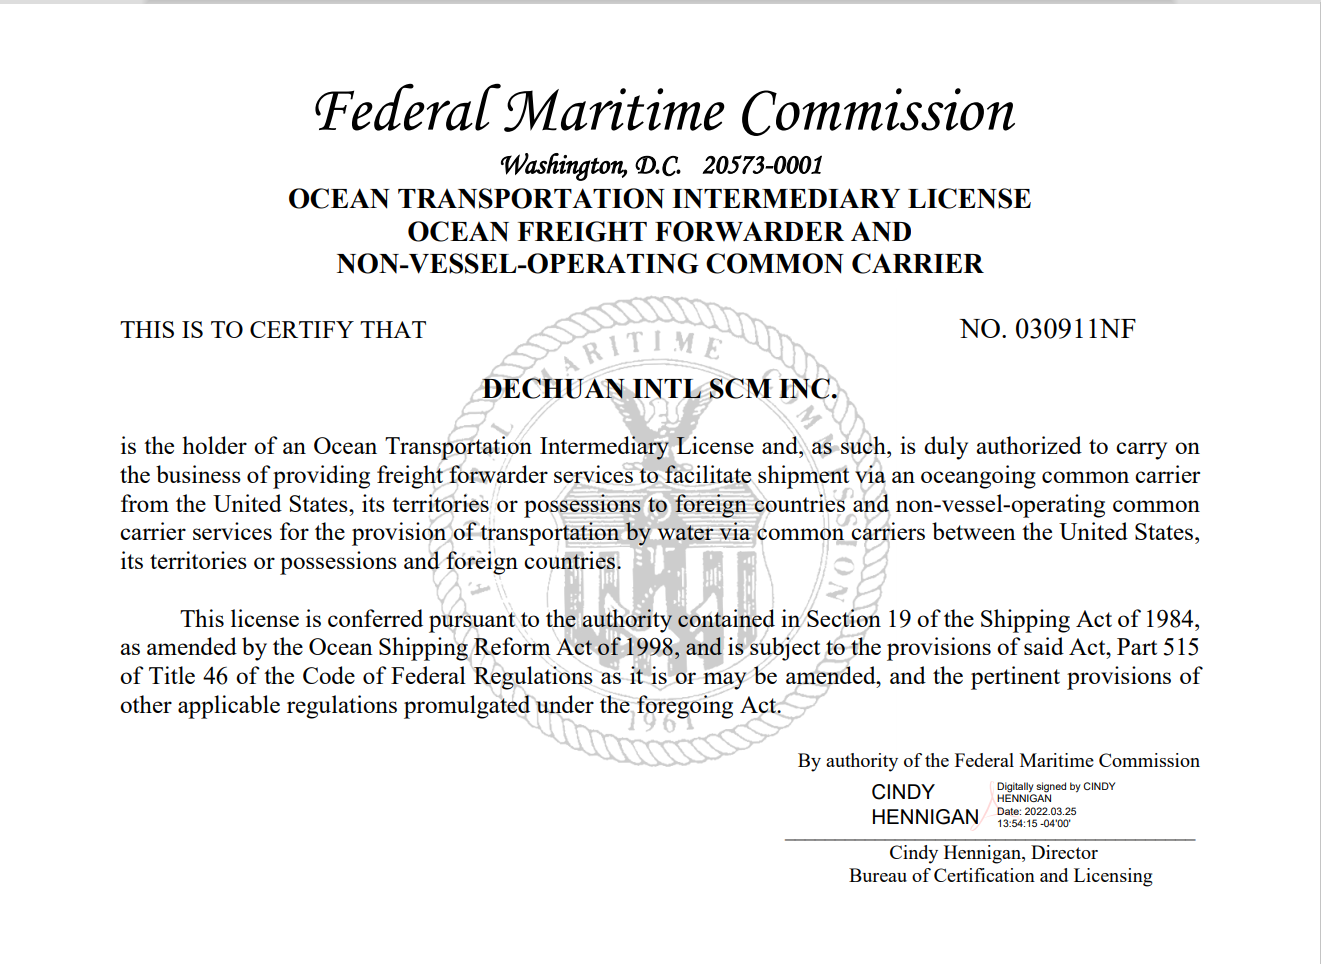 FMC License